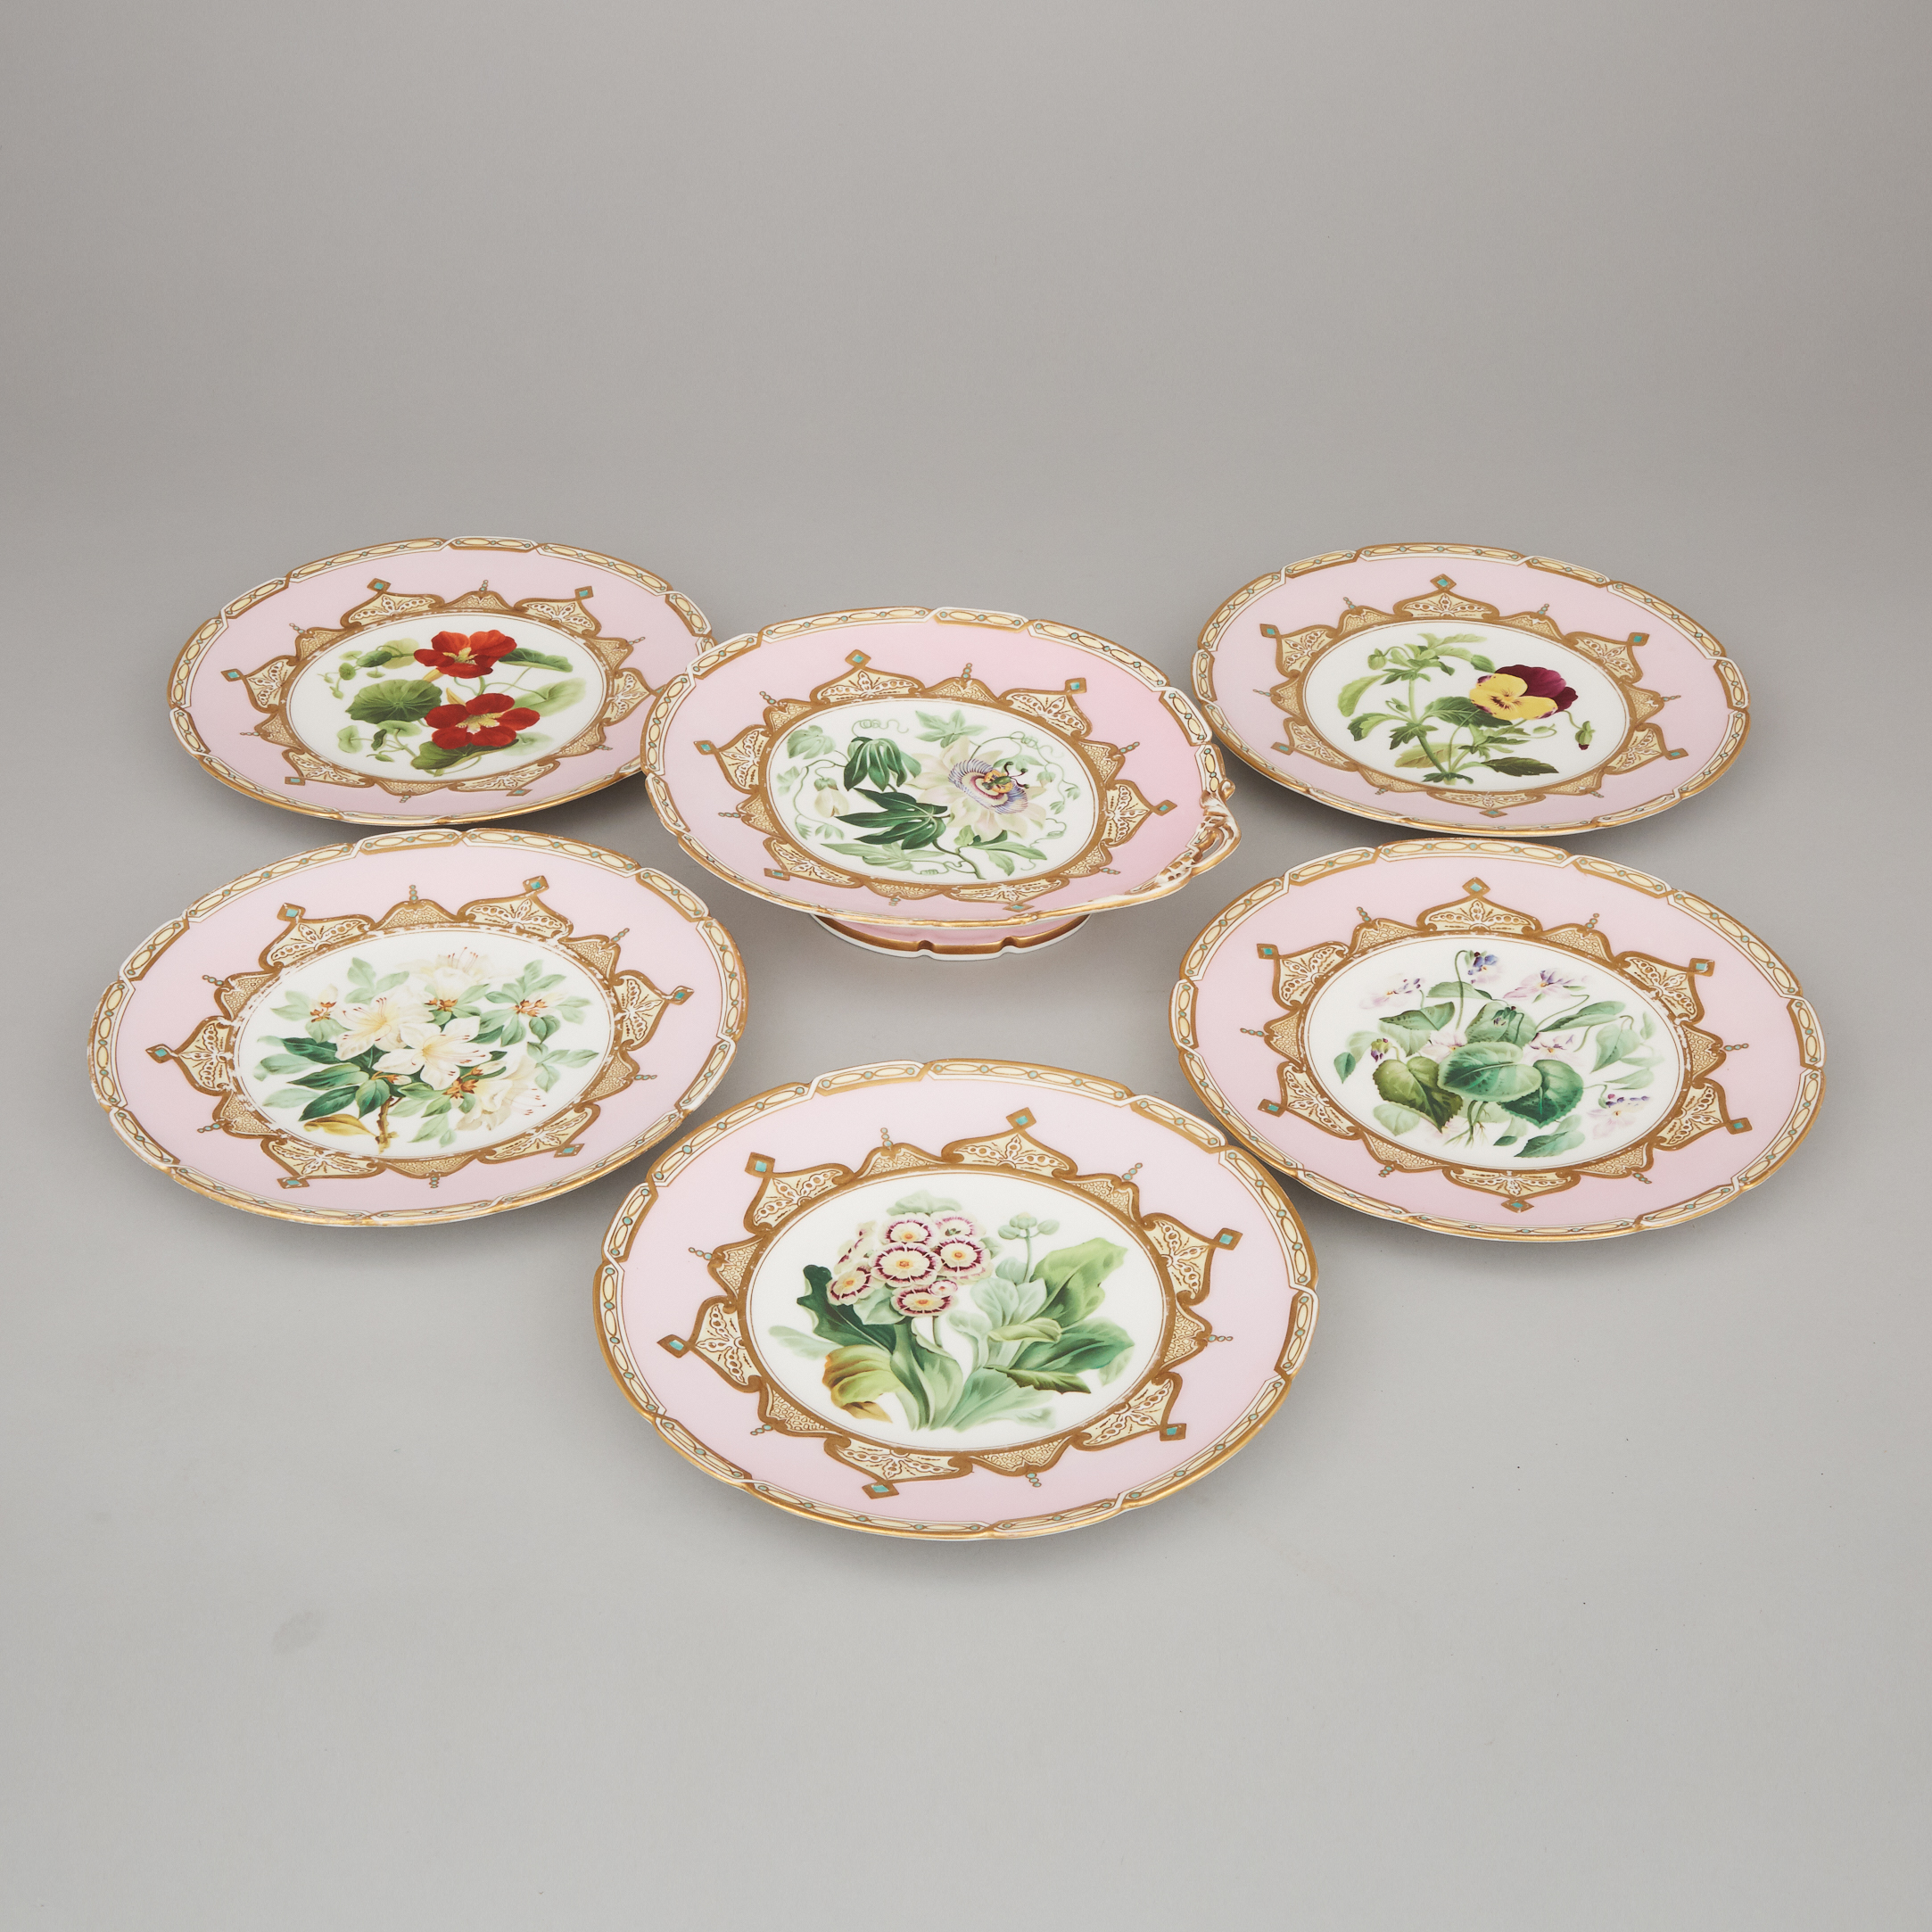 English Porcelain Botanical Dessert Service, mid-19th century